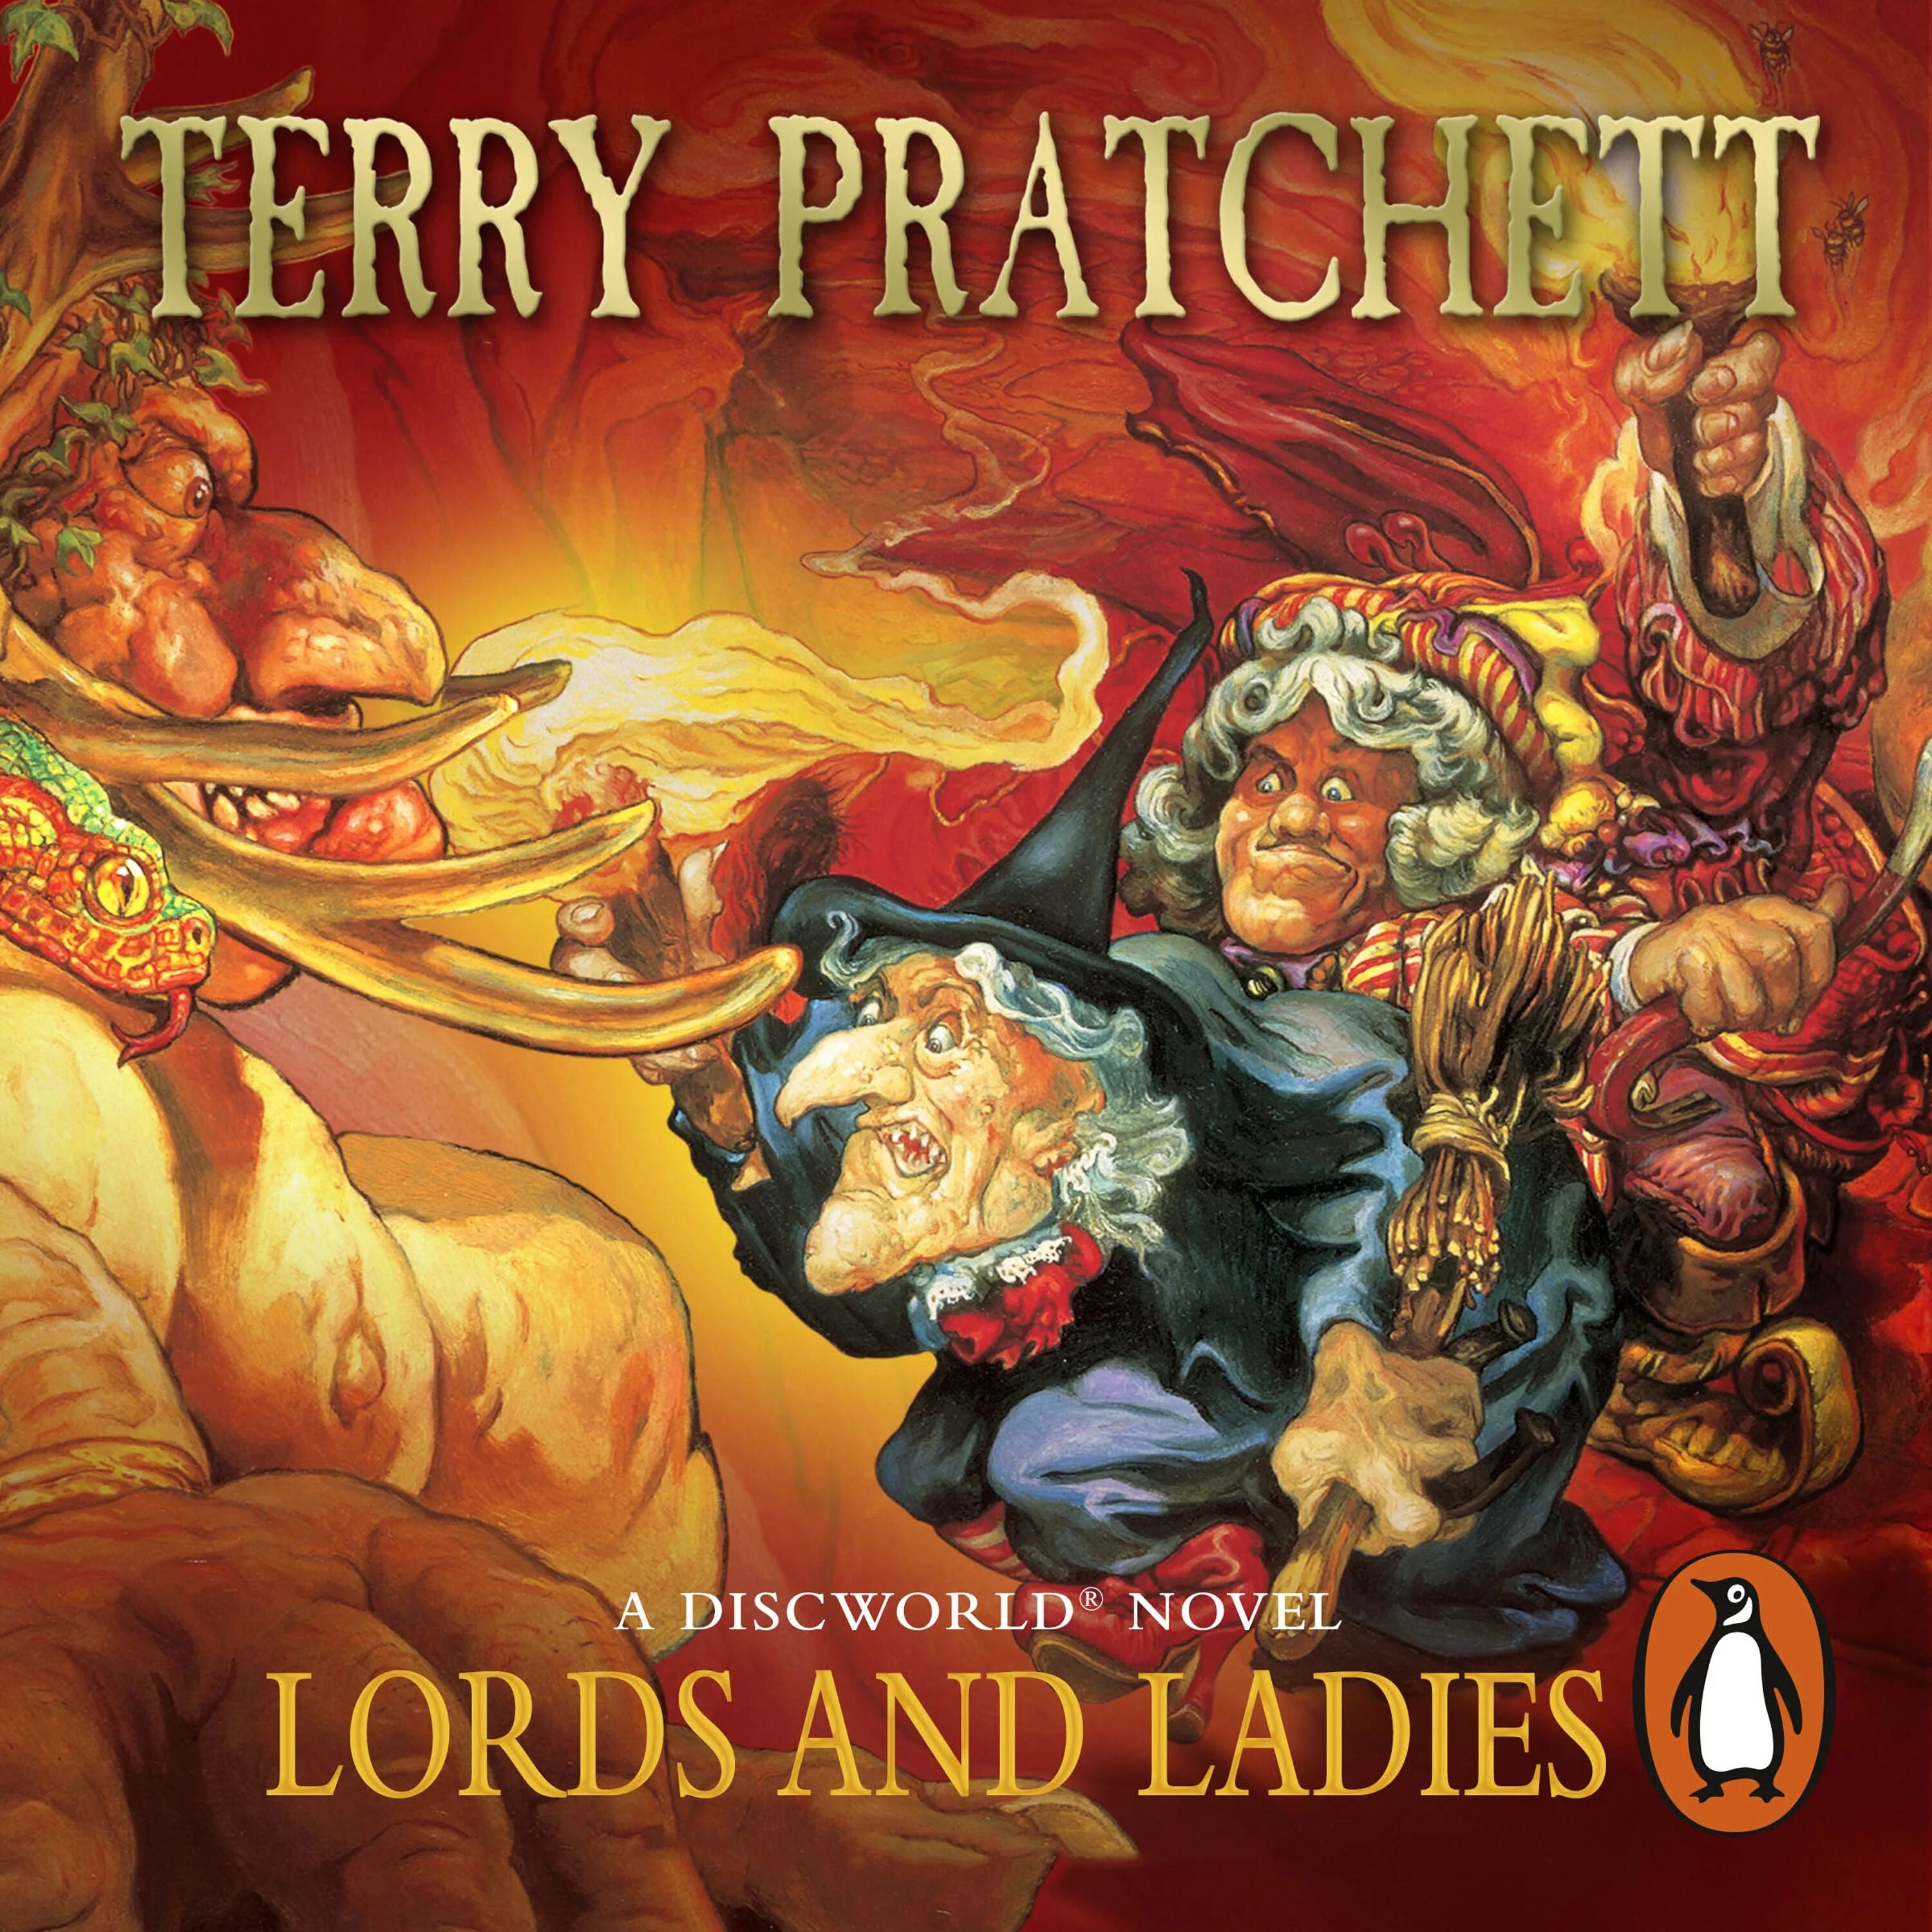 Терри пратчетт аудиокниги. Lords and Ladies Пратчетт. Terry Pratchett Lords and Ladies. Терри Пратчетт плоский мир дамы и Господа. Терри Пратчетт дамы и Господа иллюстрации.